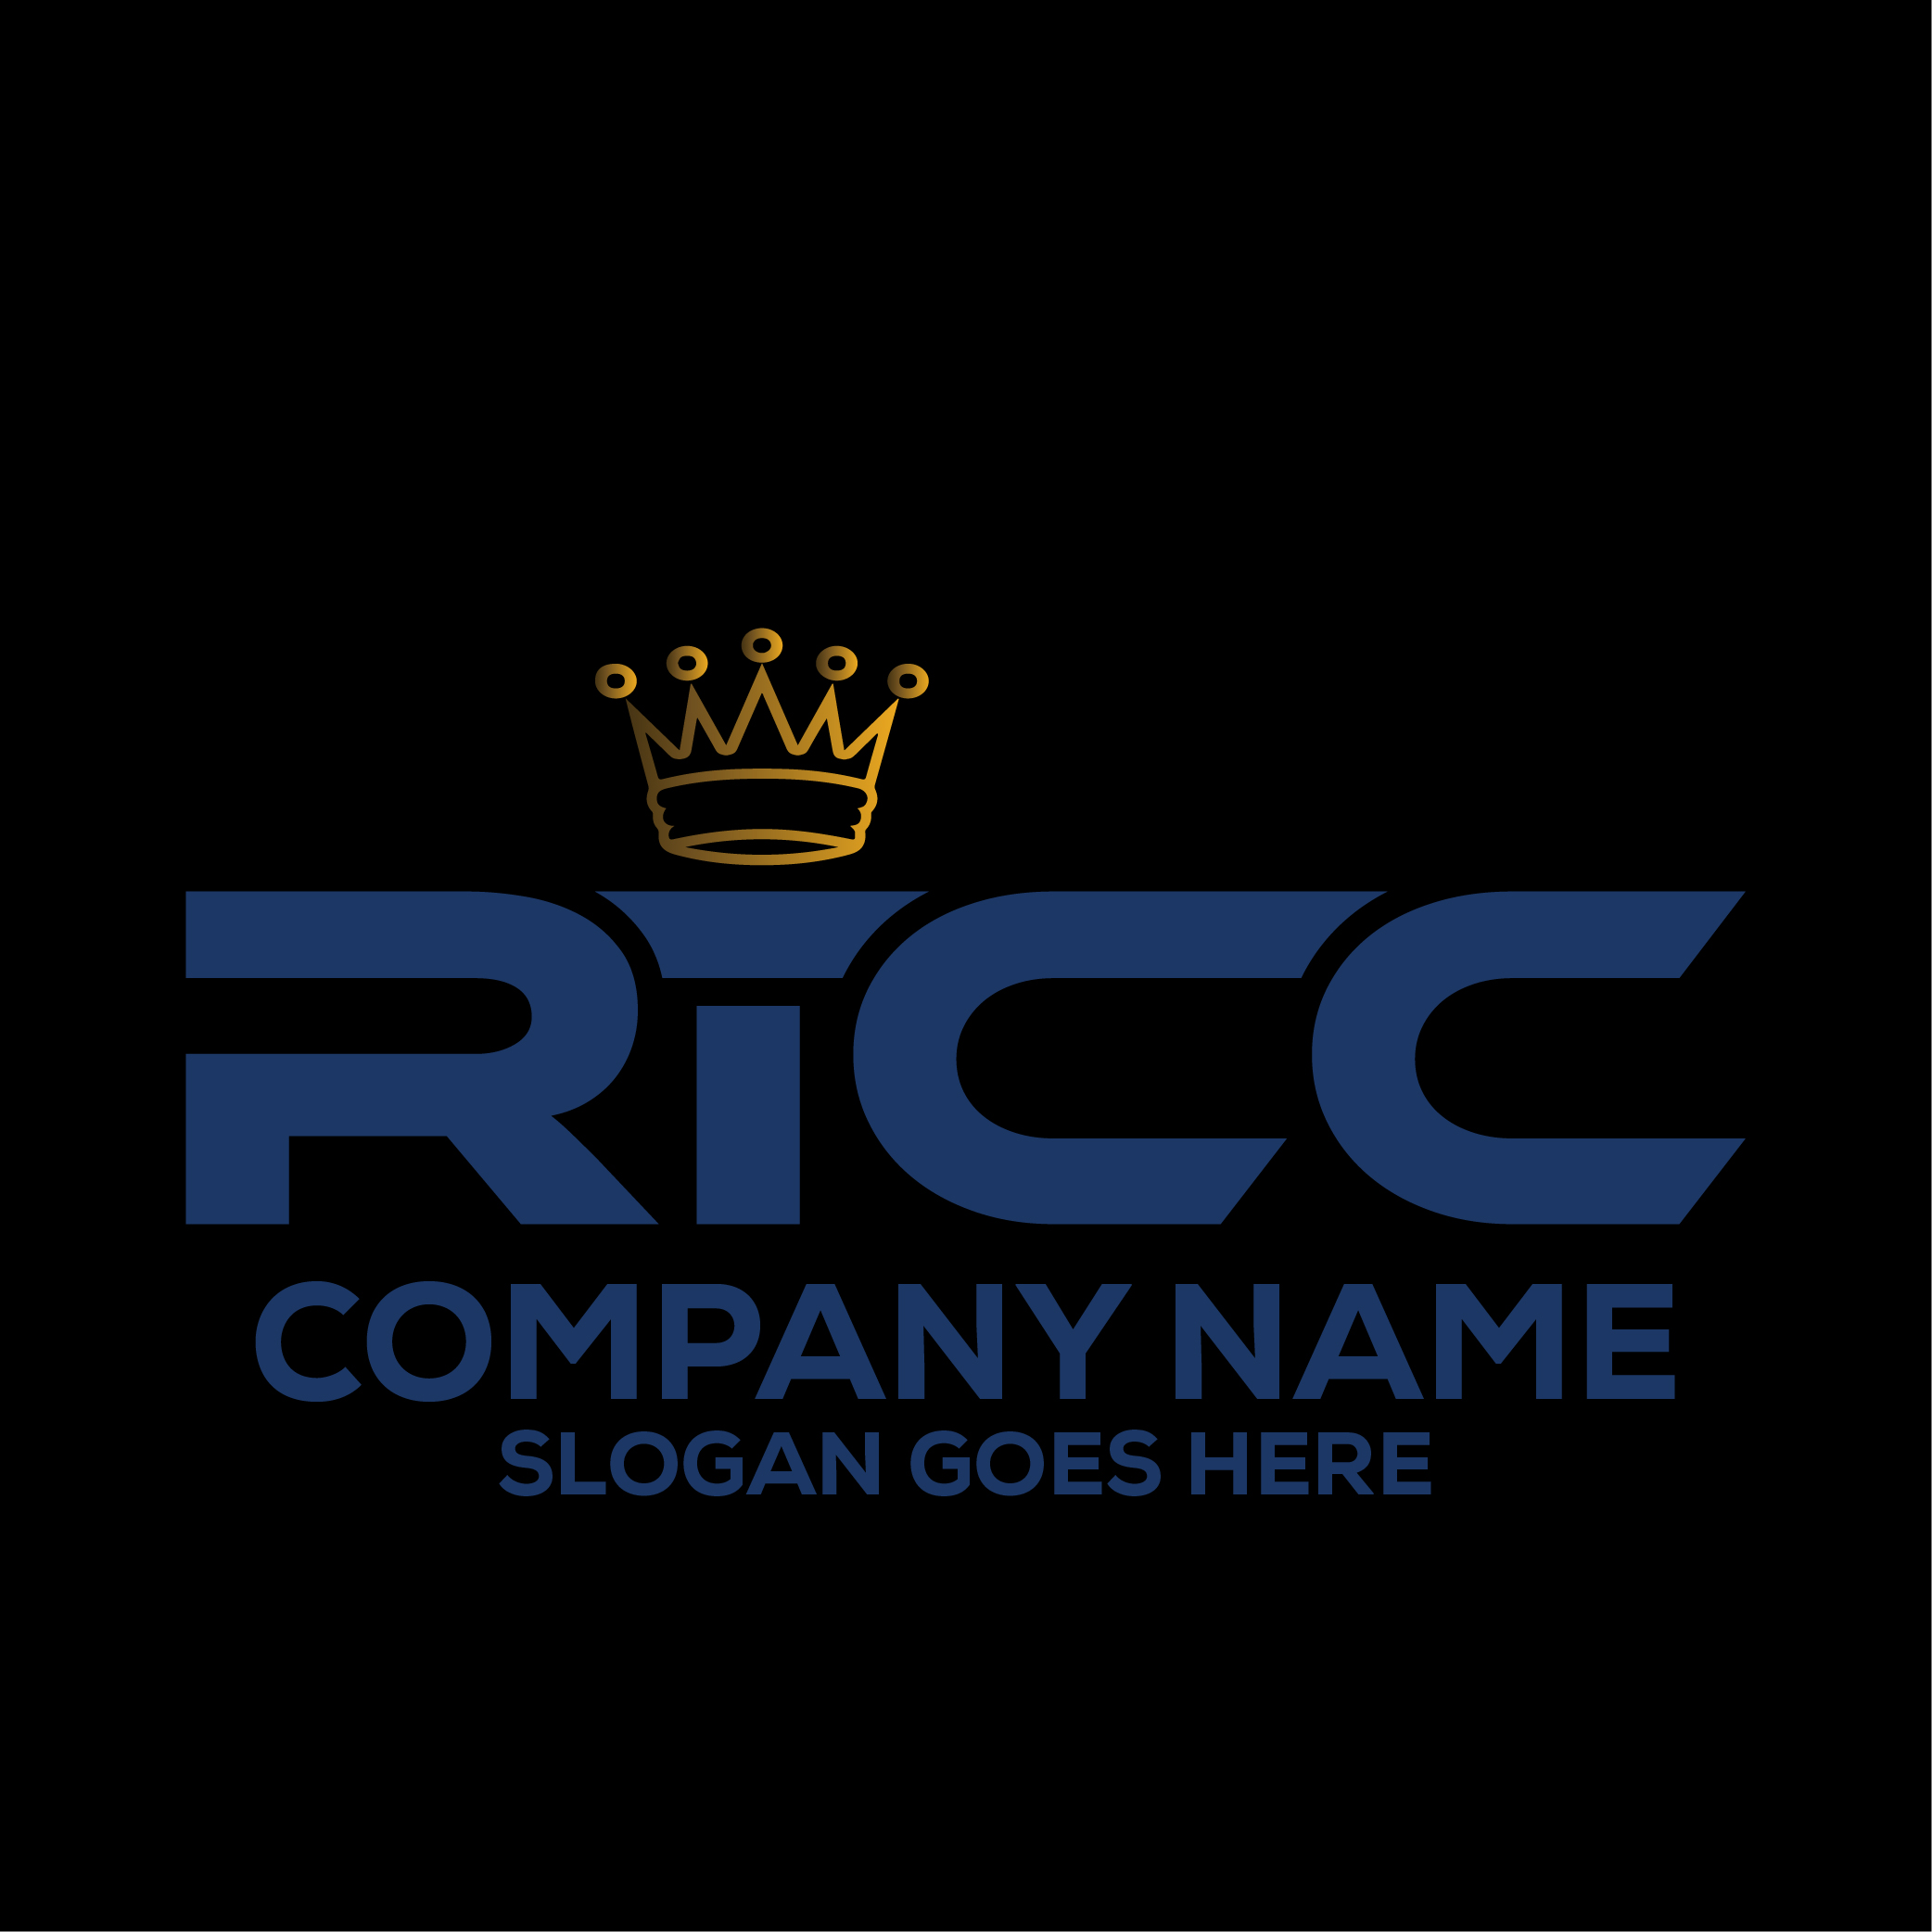 Letter RTCC Logo Design Vector Image Template preview image.